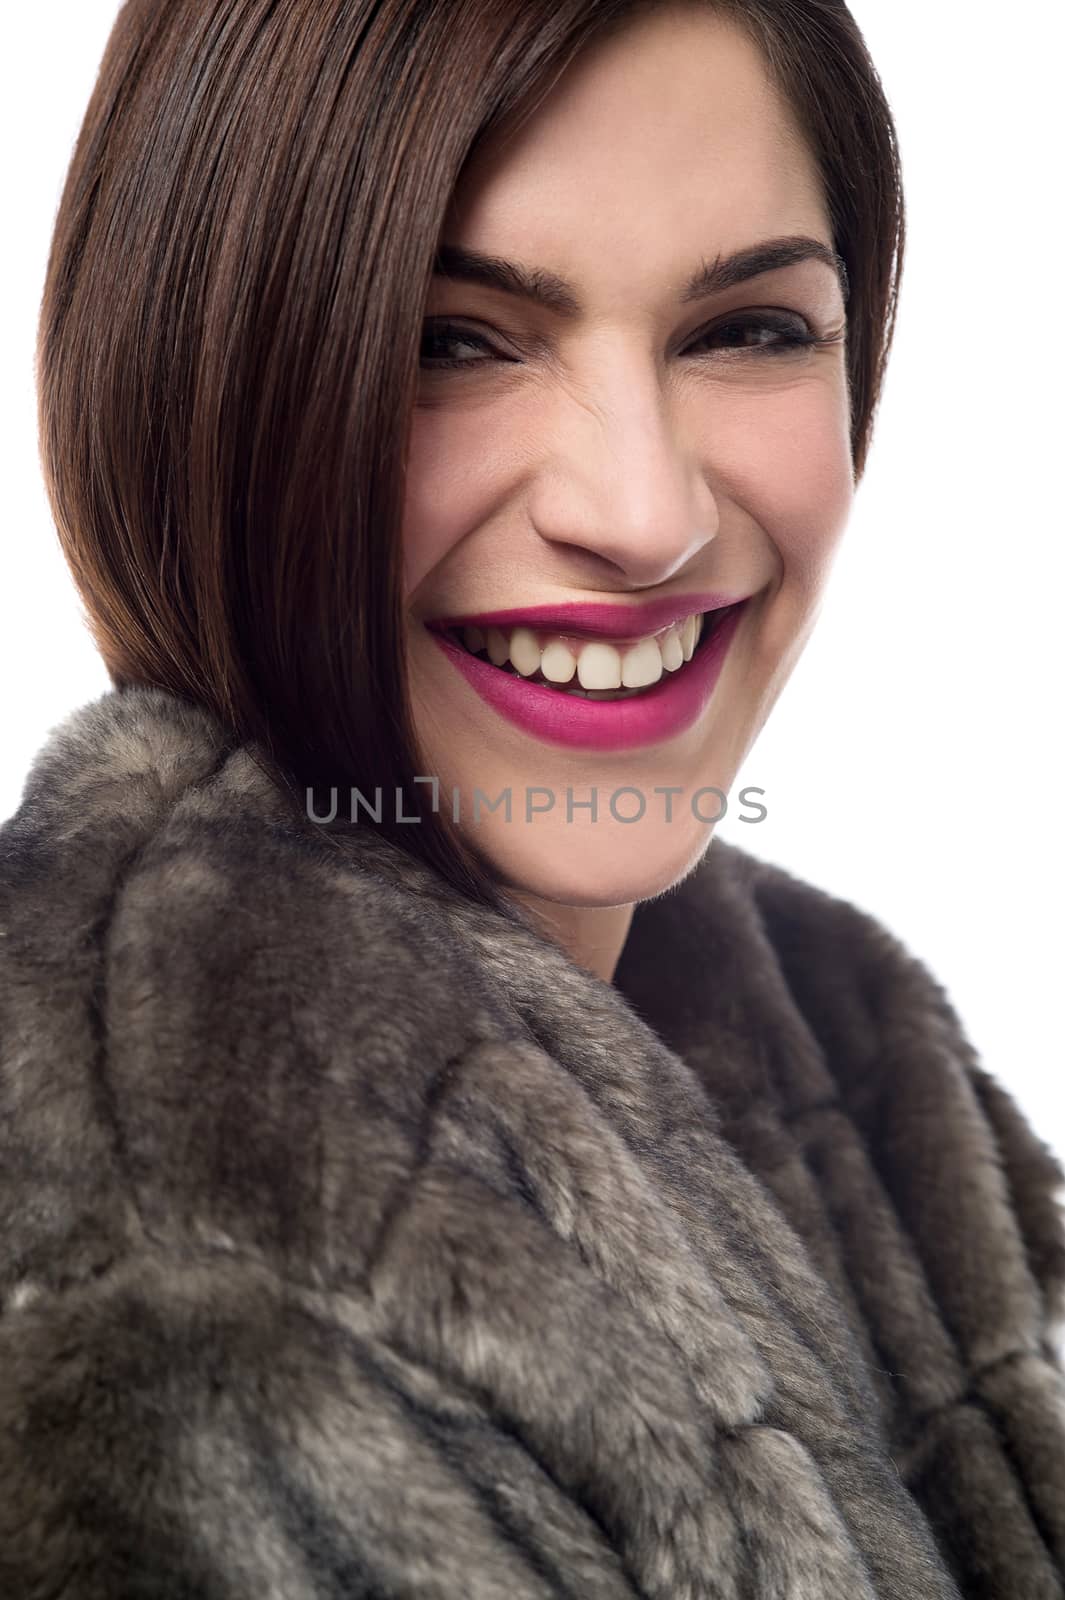 Closeup image of young woman in fur coat